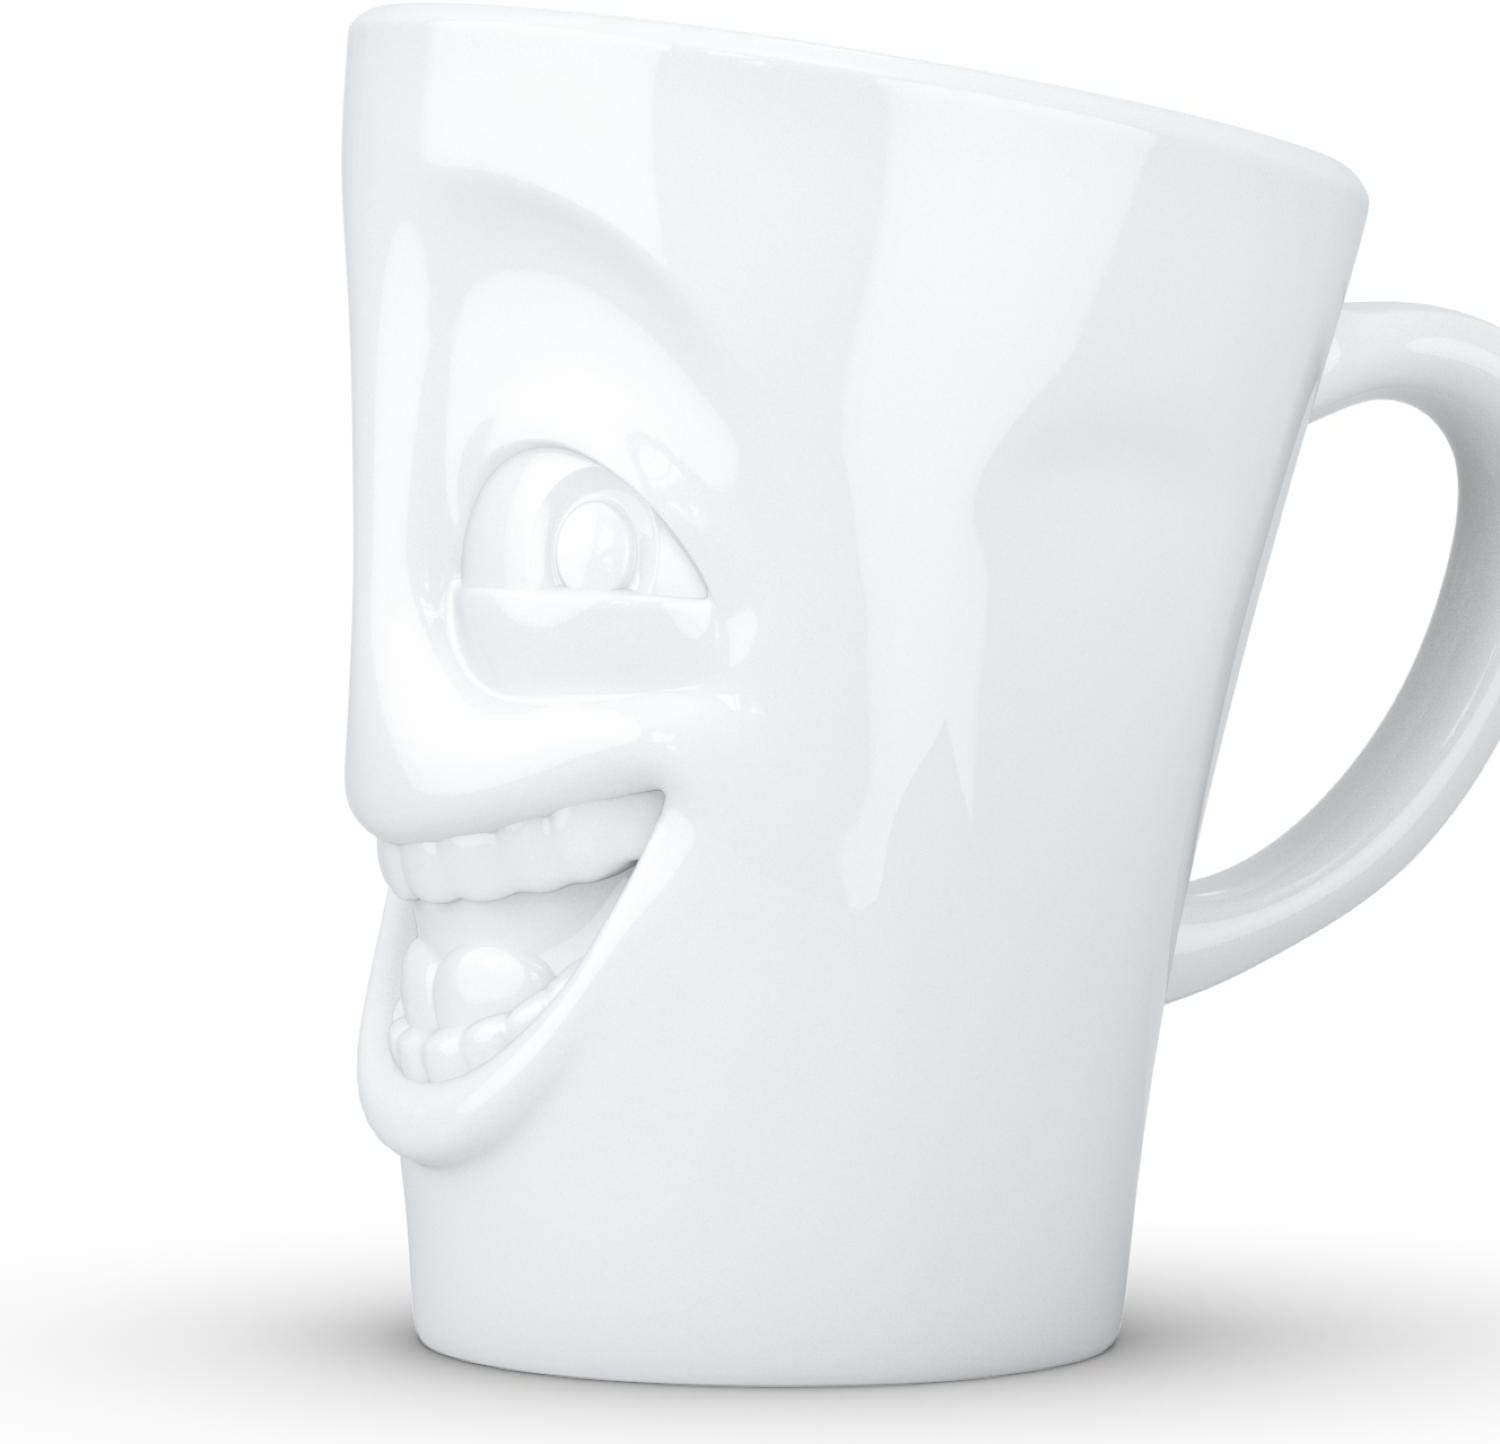 Tassendruck Mug with Saying Scheisse ist Wenn der Furz was Wiegt -  White/Smiley//Kacke/Funny/Funny/Funny/Mug/Cup/Best Quality - 25 Years of